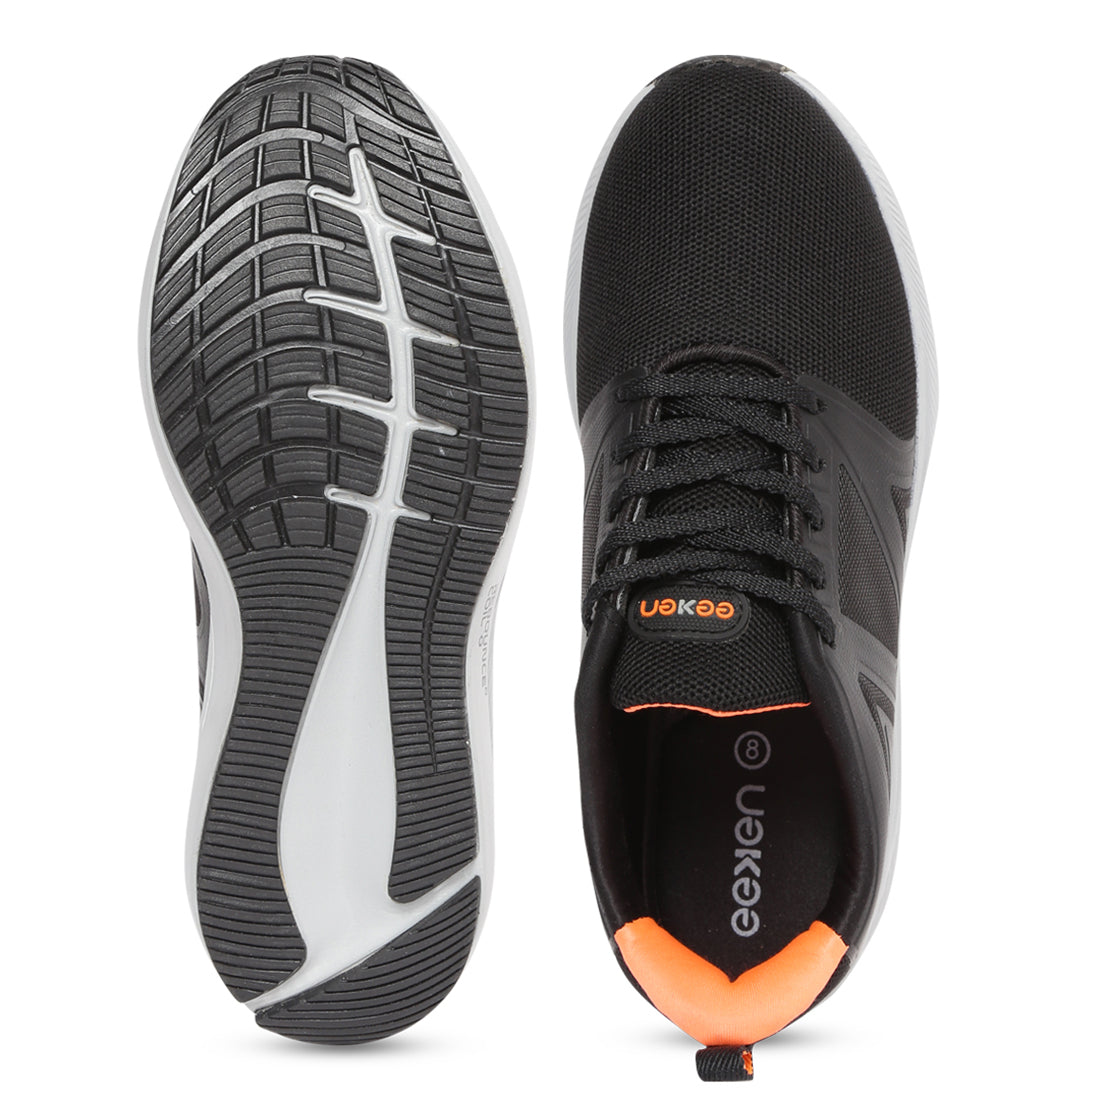 Eeken Black - Orange Athleisure Shoes for Men